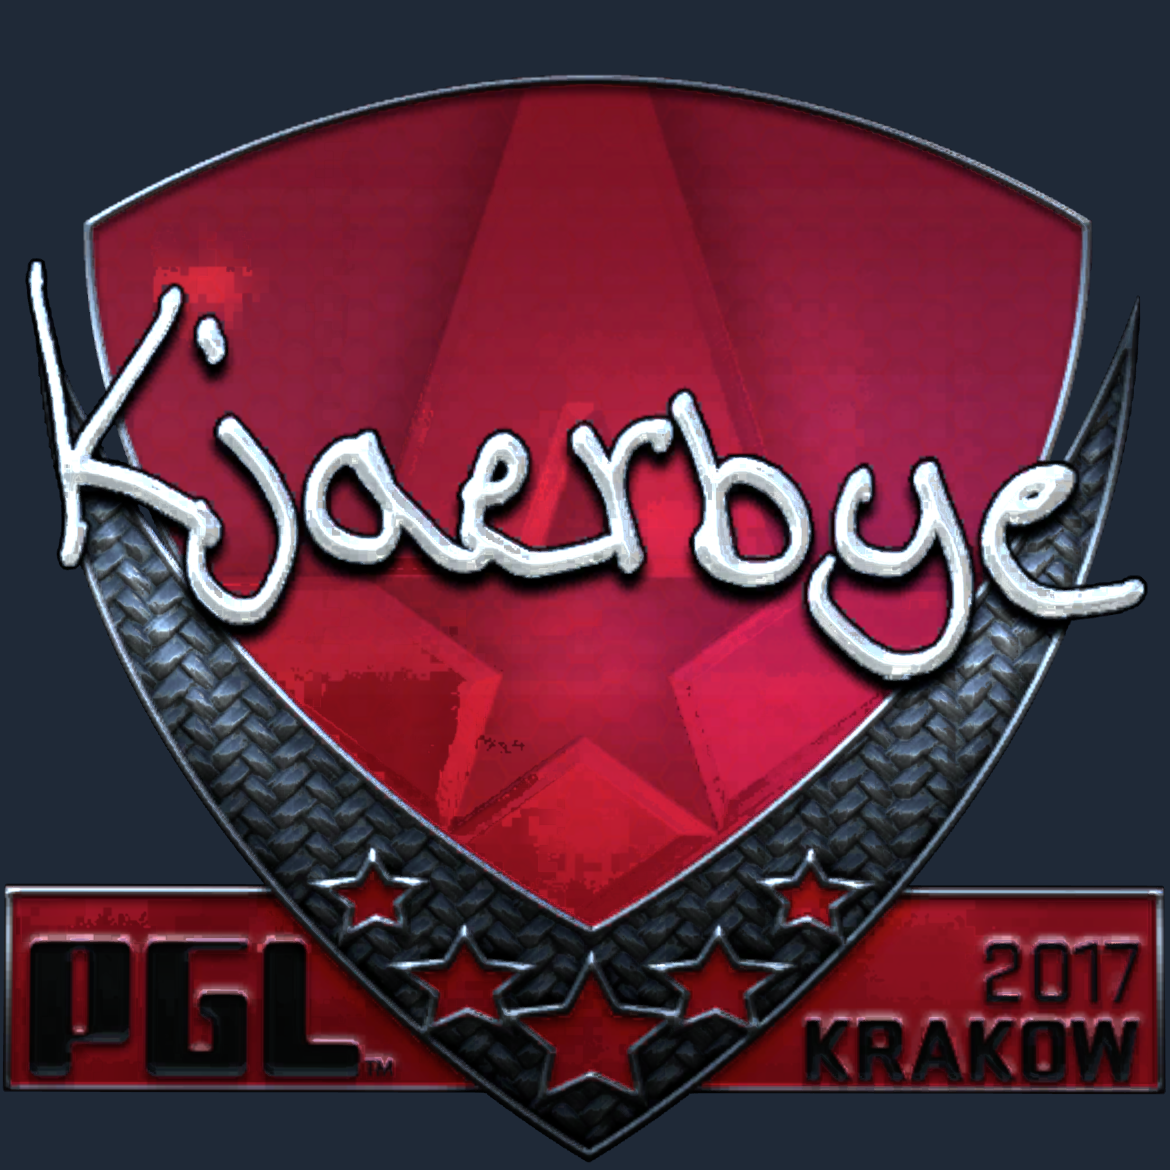 Sticker | Kjaerbye (Foil) | Krakow 2017 Screenshot